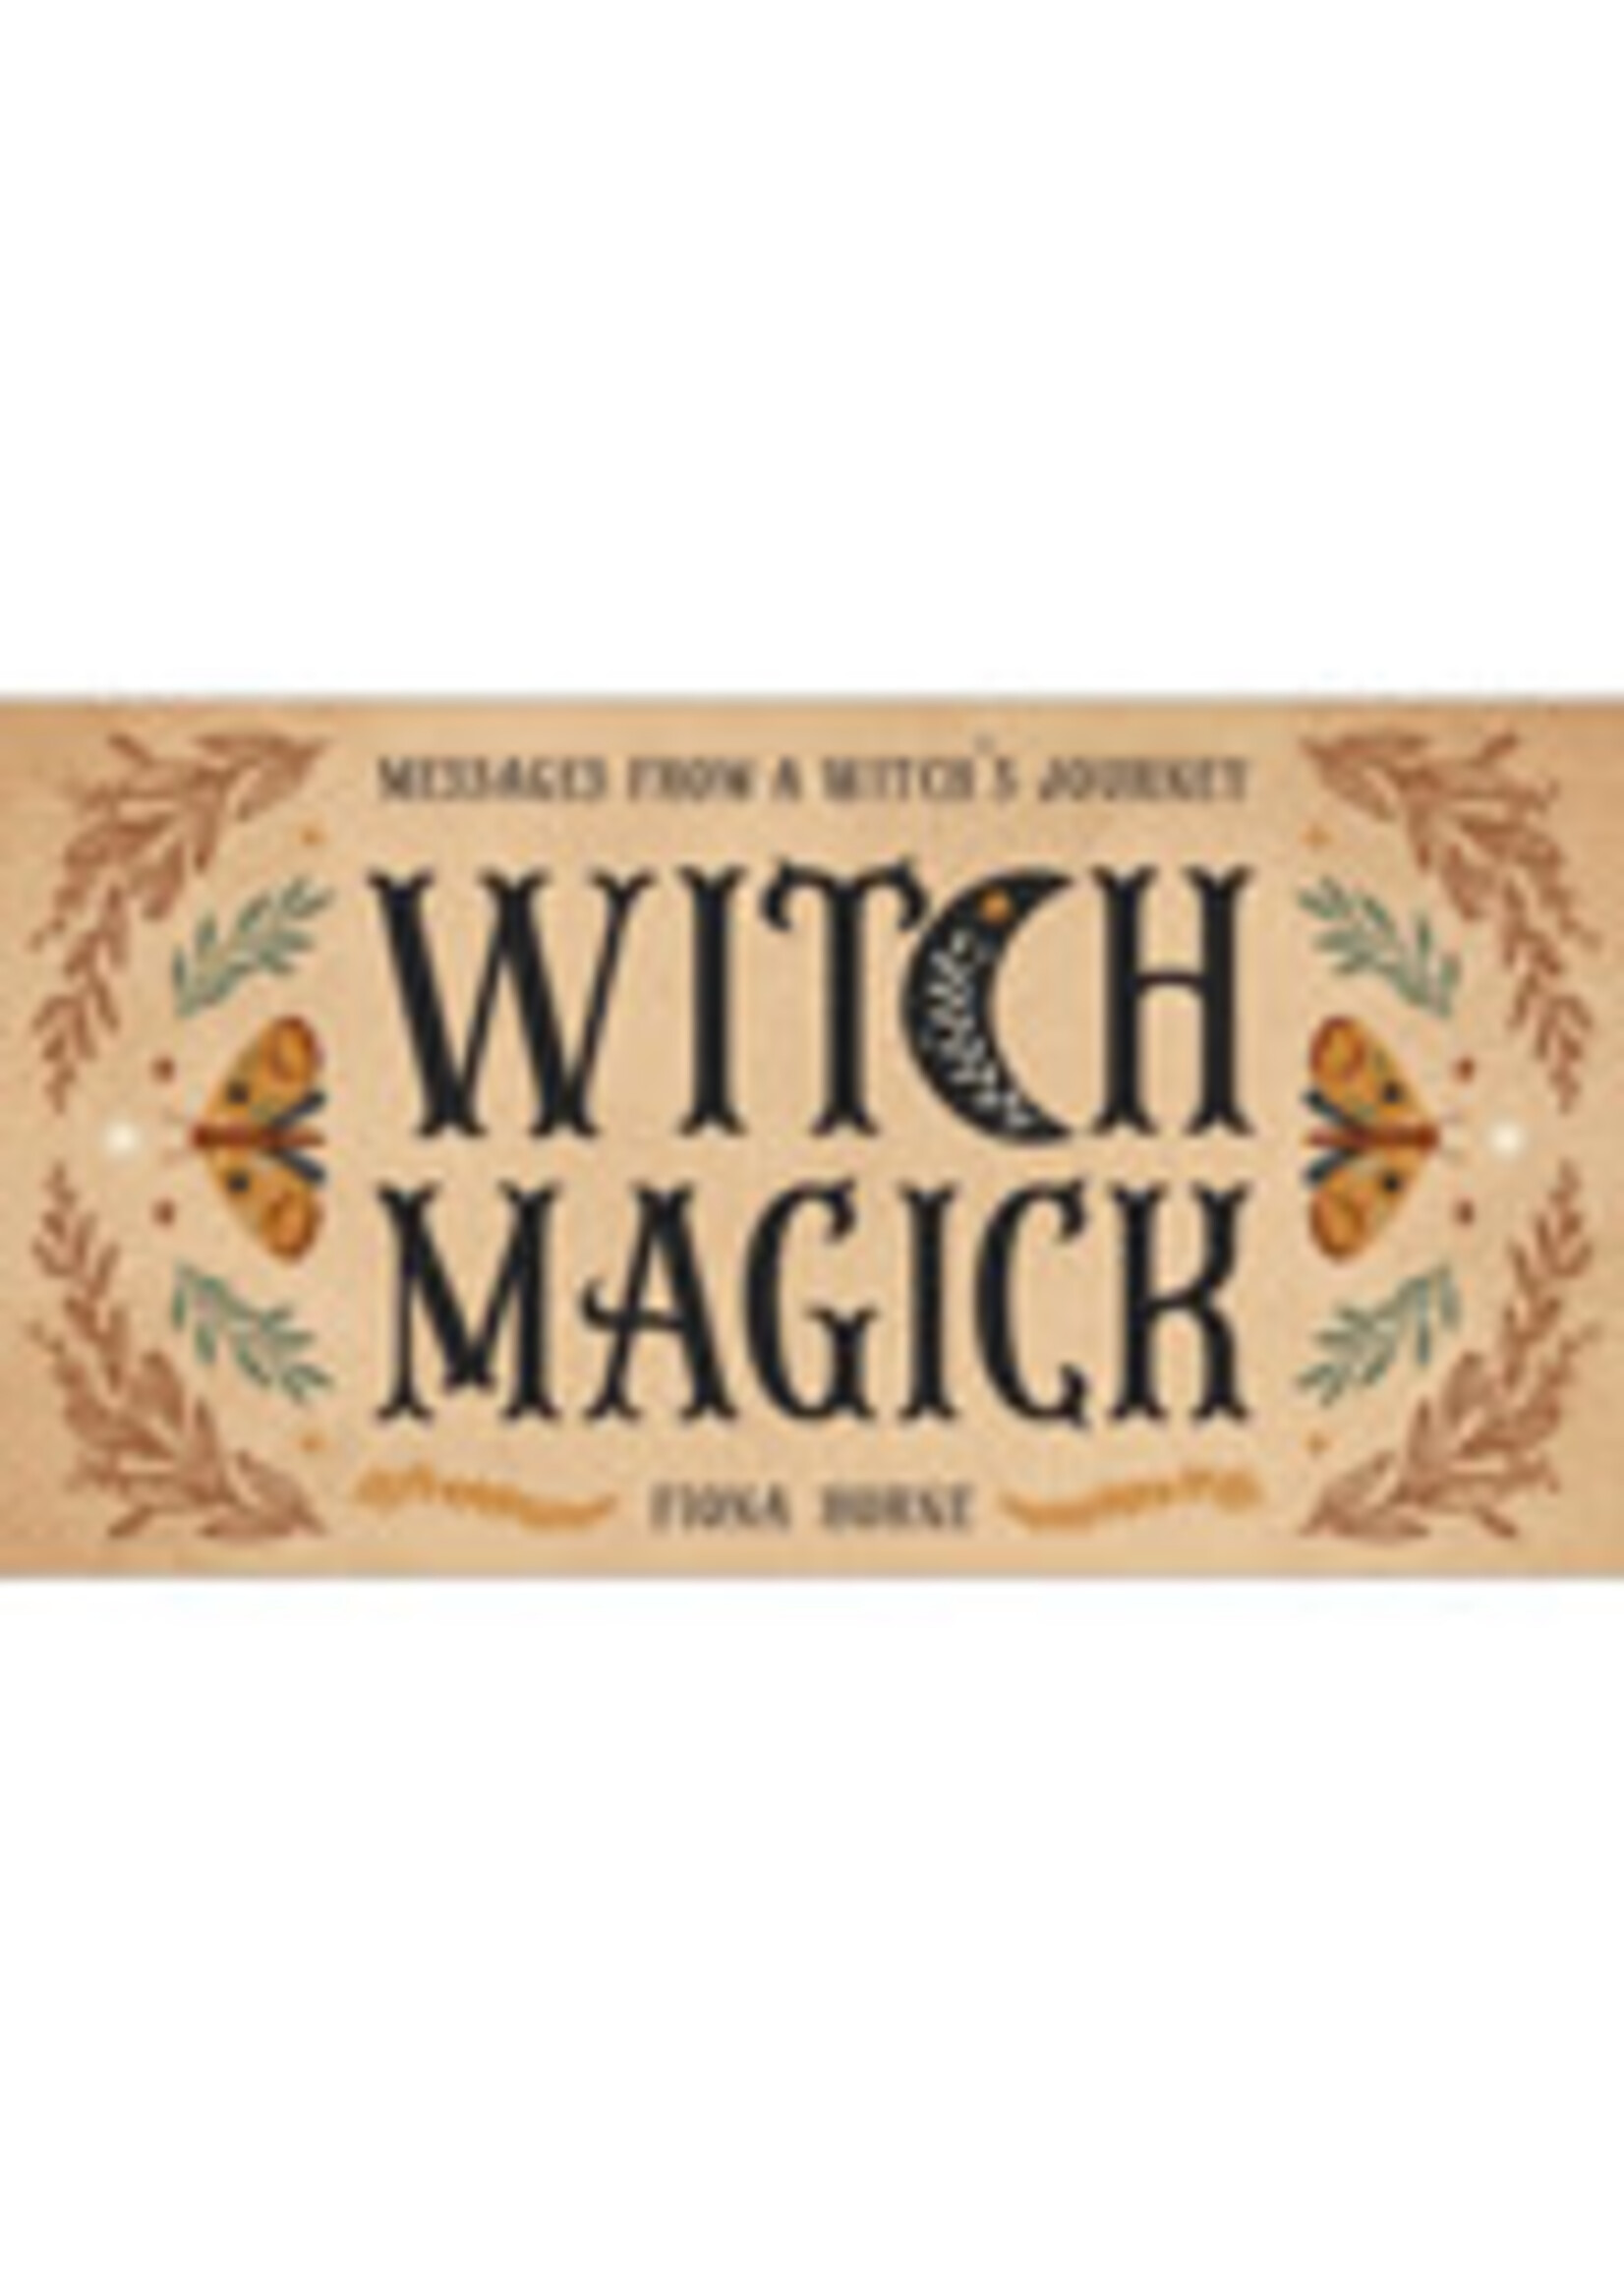 Witch Magick Inspiration Deck